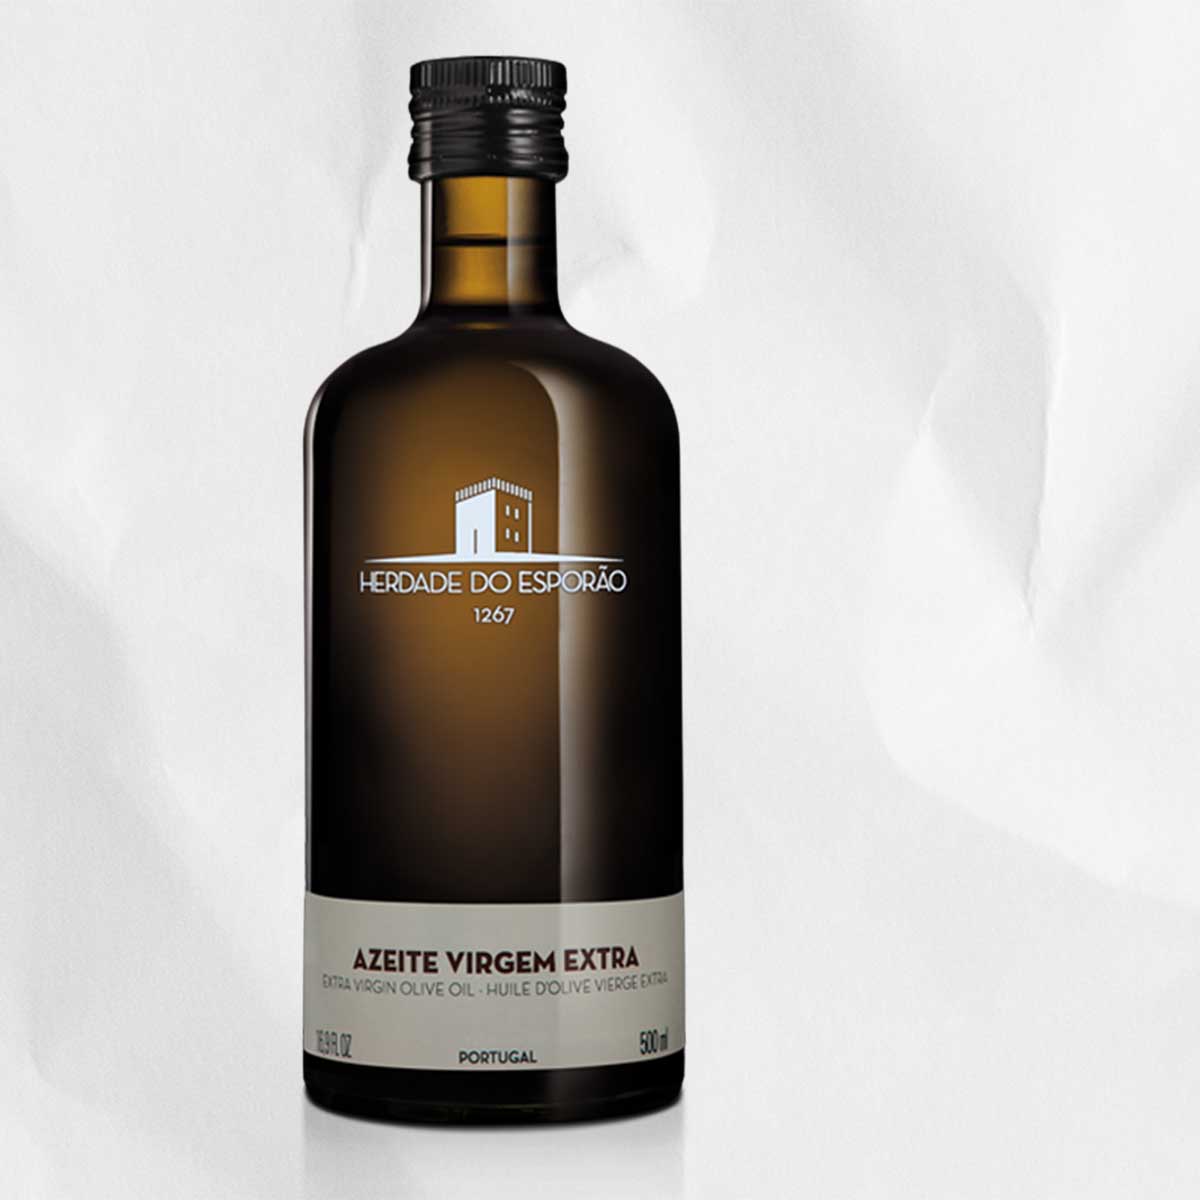 A bottle of Herdade do Esporao Extra-Virgin Olive Oil